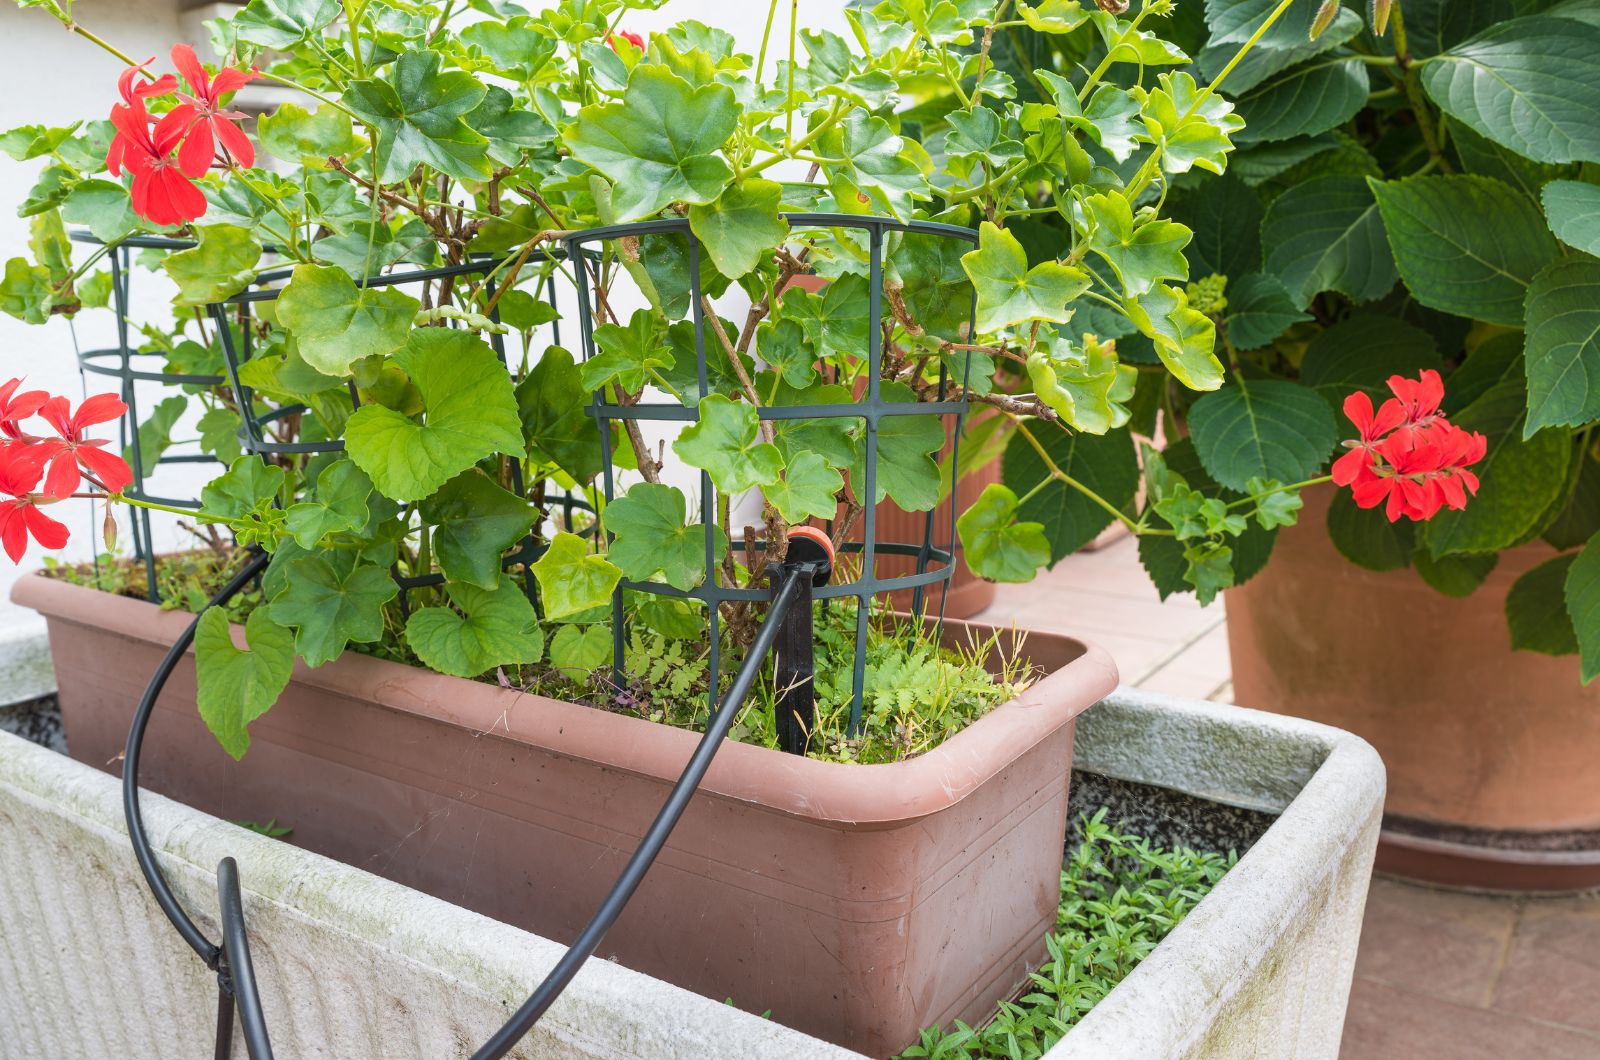 Micro drip irrigation system